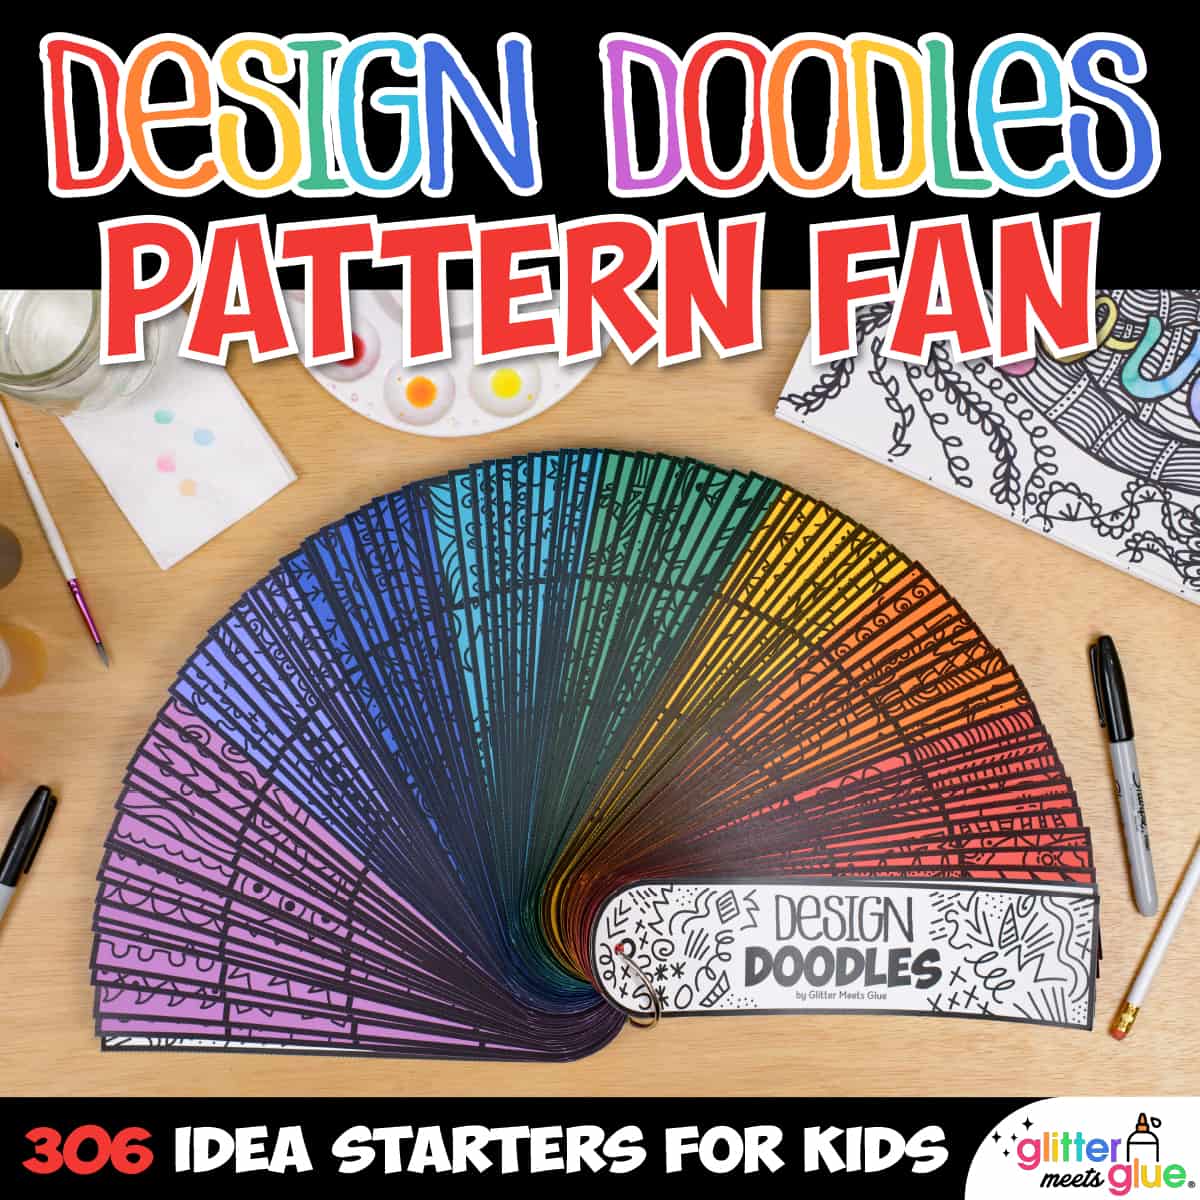 design doodles interactive fan deck for middle school art lessons